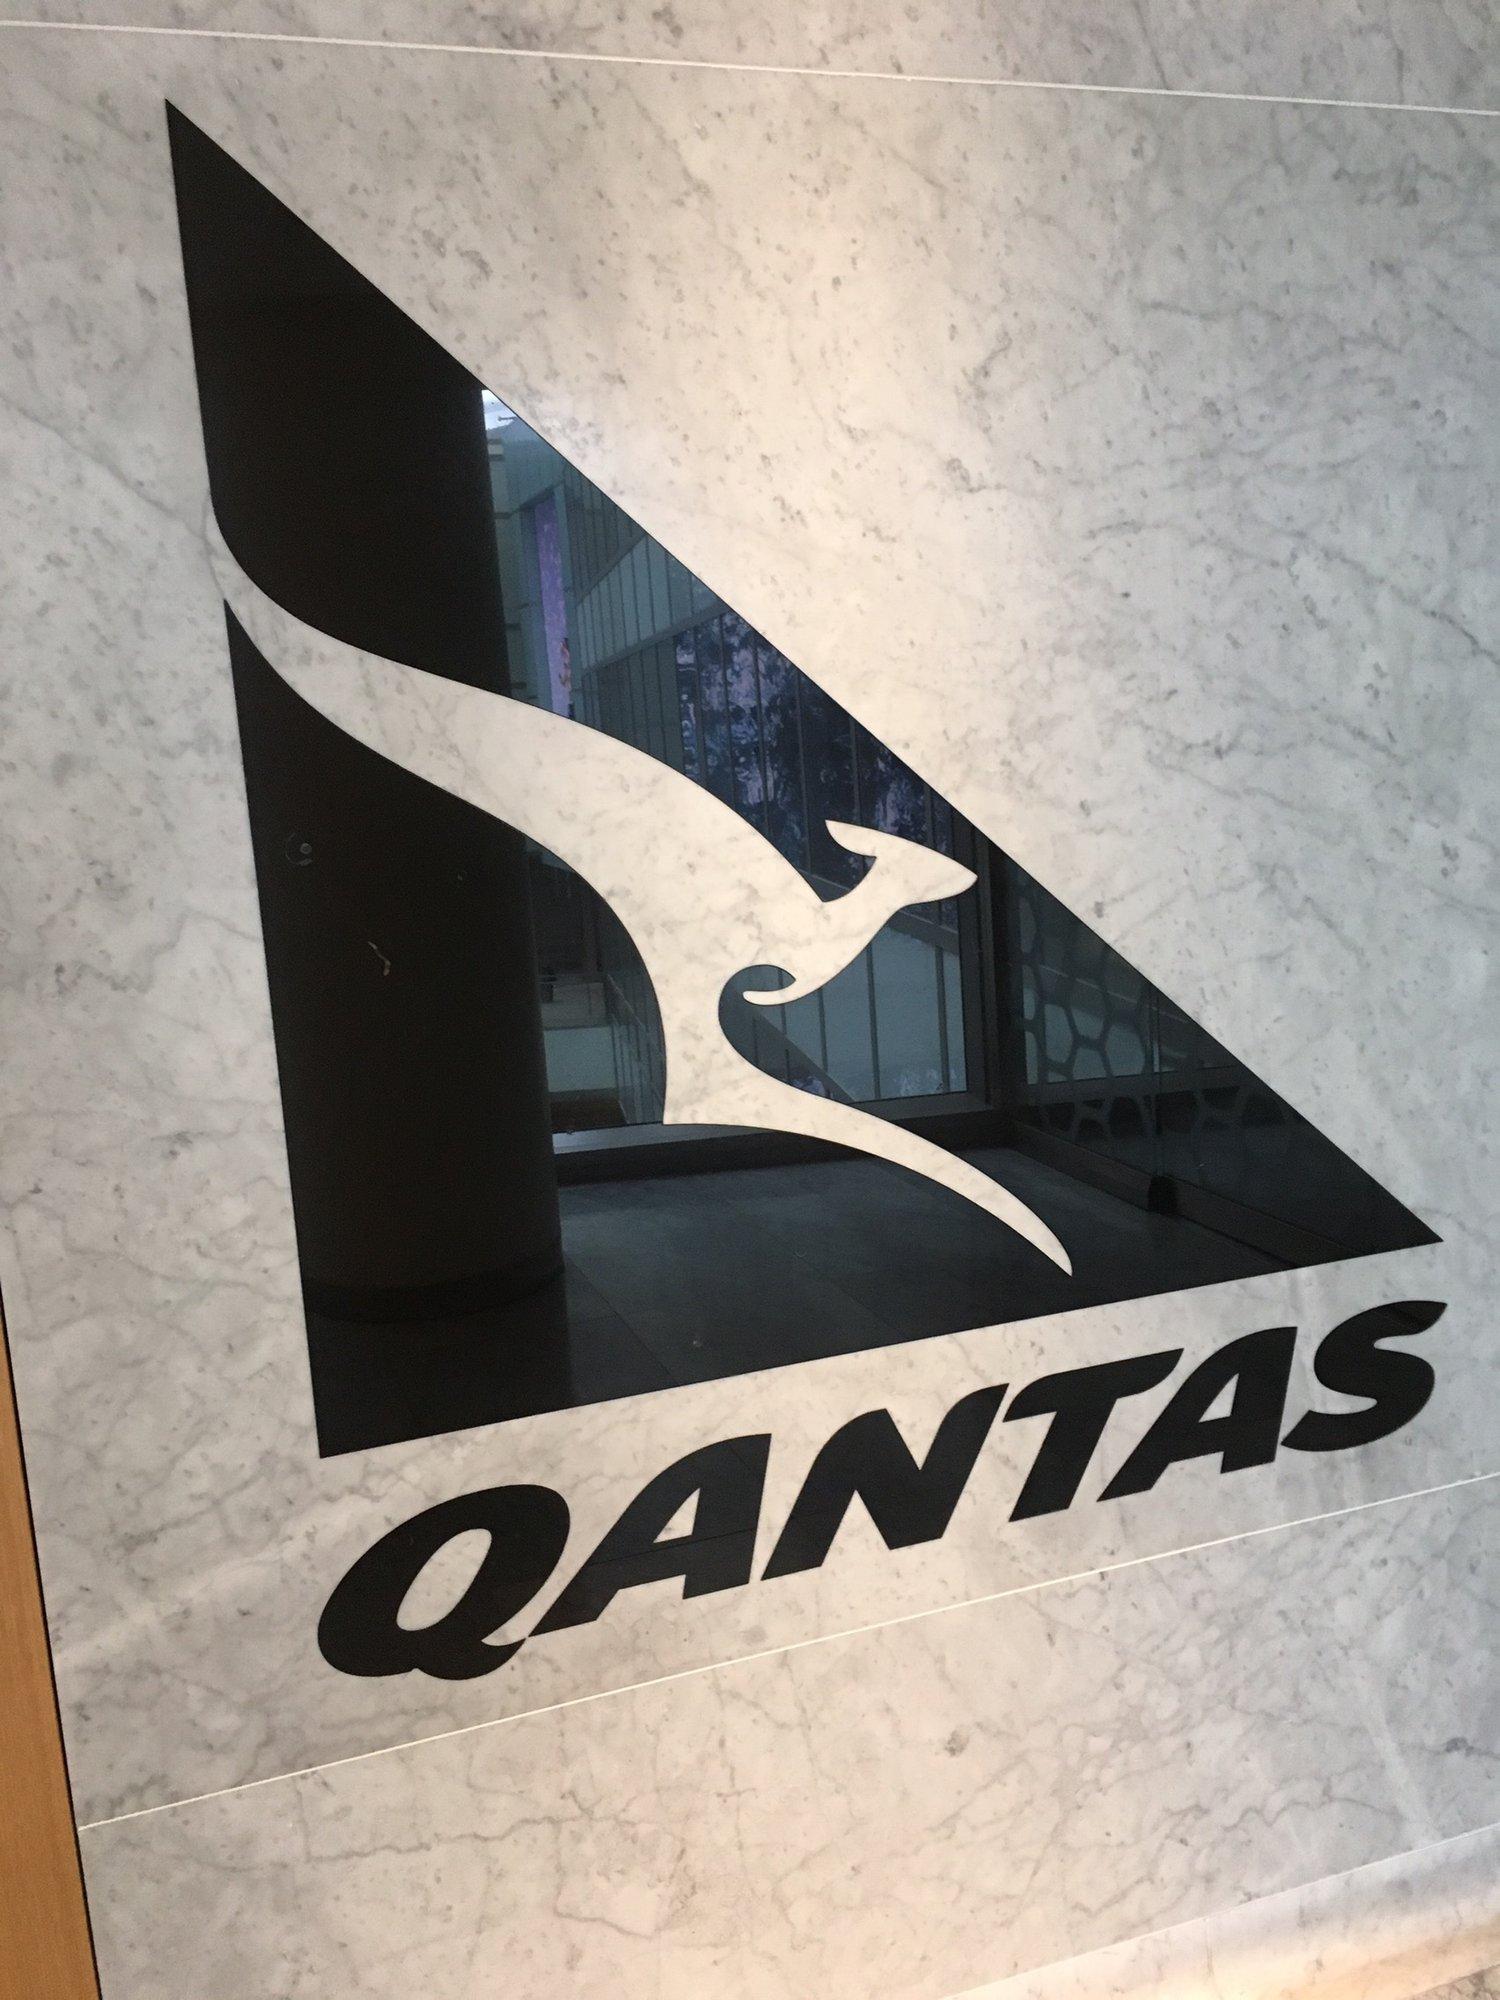 Qantas Airways International First Lounge image 23 of 77